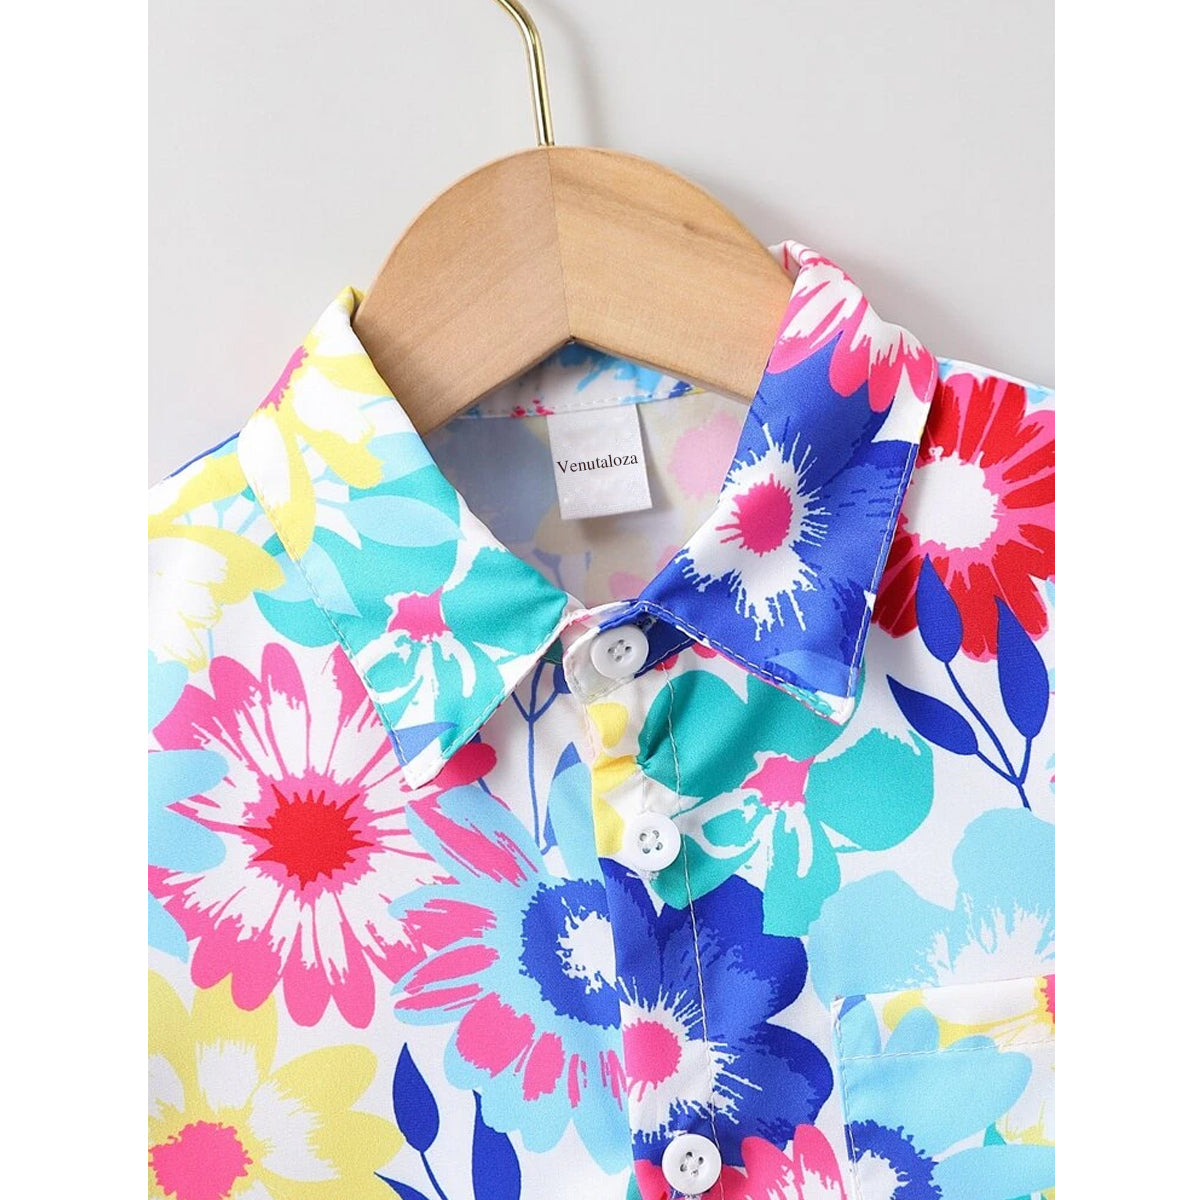 Venutaloza Forever Floral print Graphic Designer Button Front Shirt (Combo Pack Of 2) For Boy.